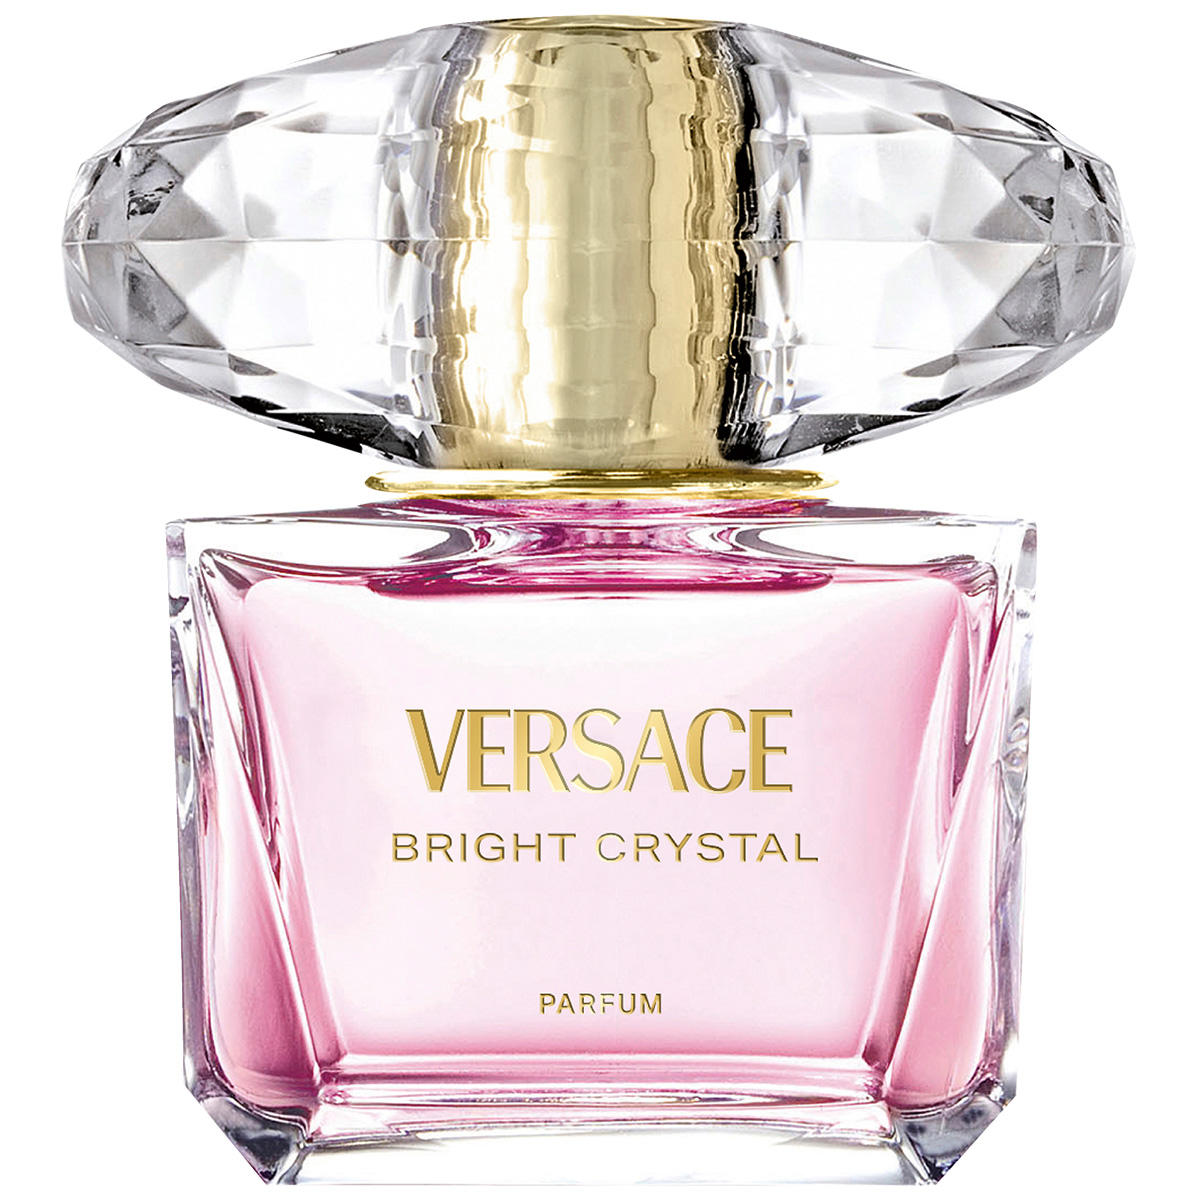 Versace Bright Crystal Parfum  - 1